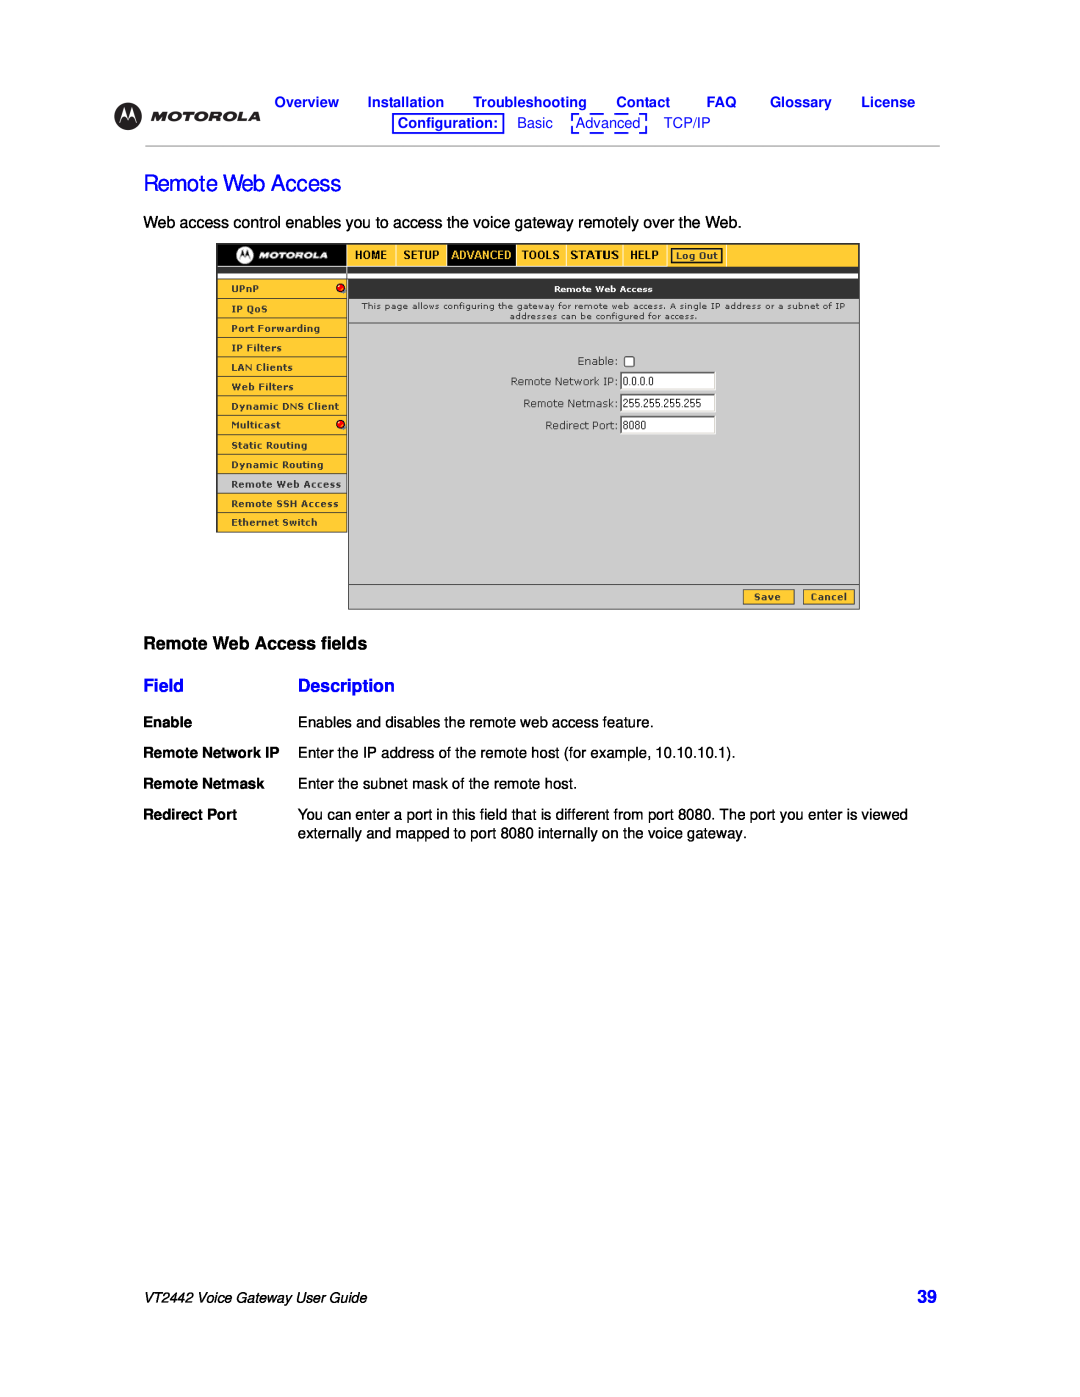 Motorola VT2442 Remote Web Access fields, Field, Description, Overview, Installation, Contact, Glossary, License, ce d 